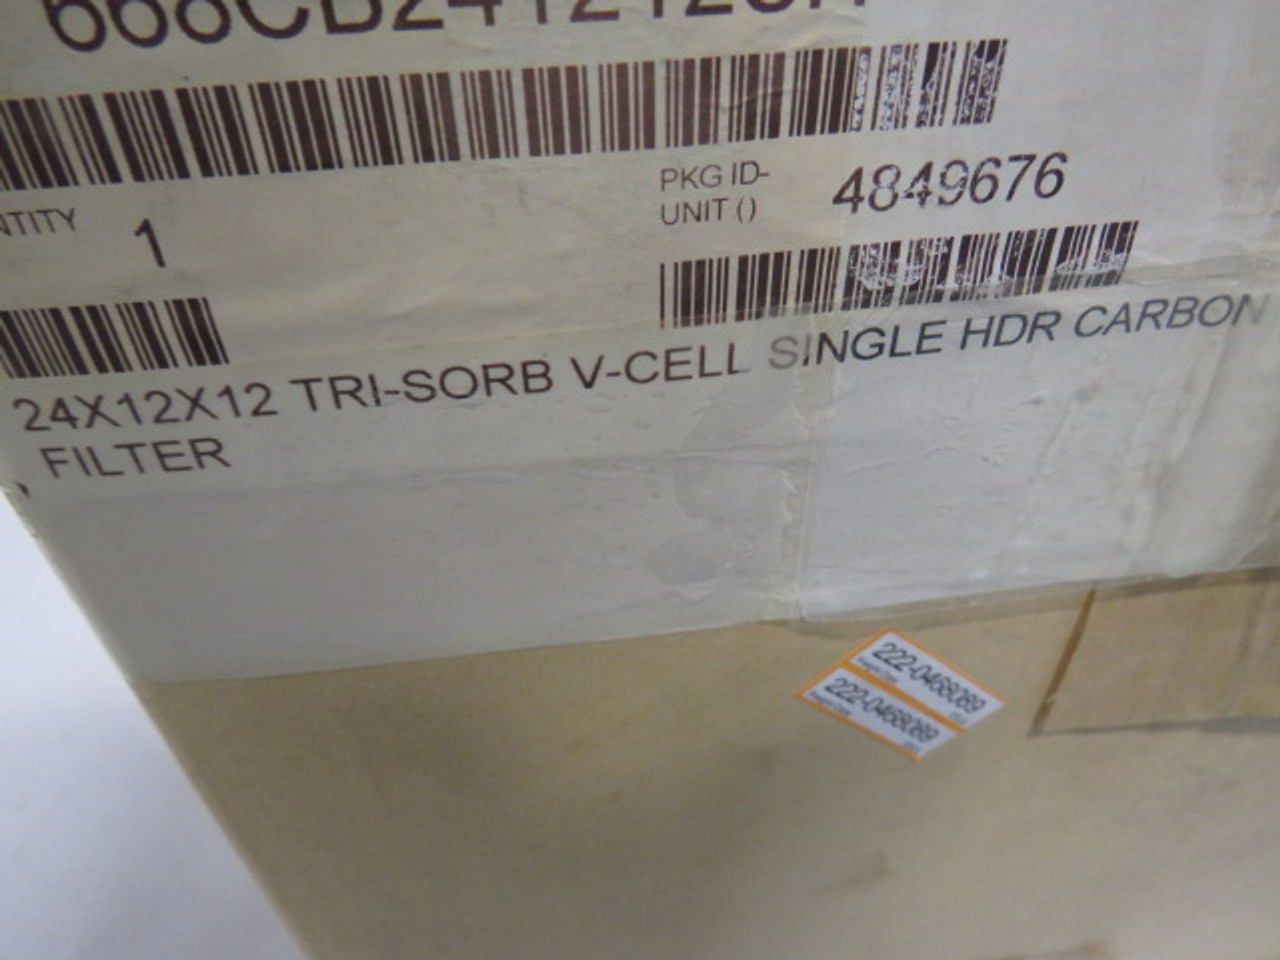 Tridim 24X12X12 36lbs Carbon Tri-Sorb V-Cell Single HDR Carbon Filter ! NEW !